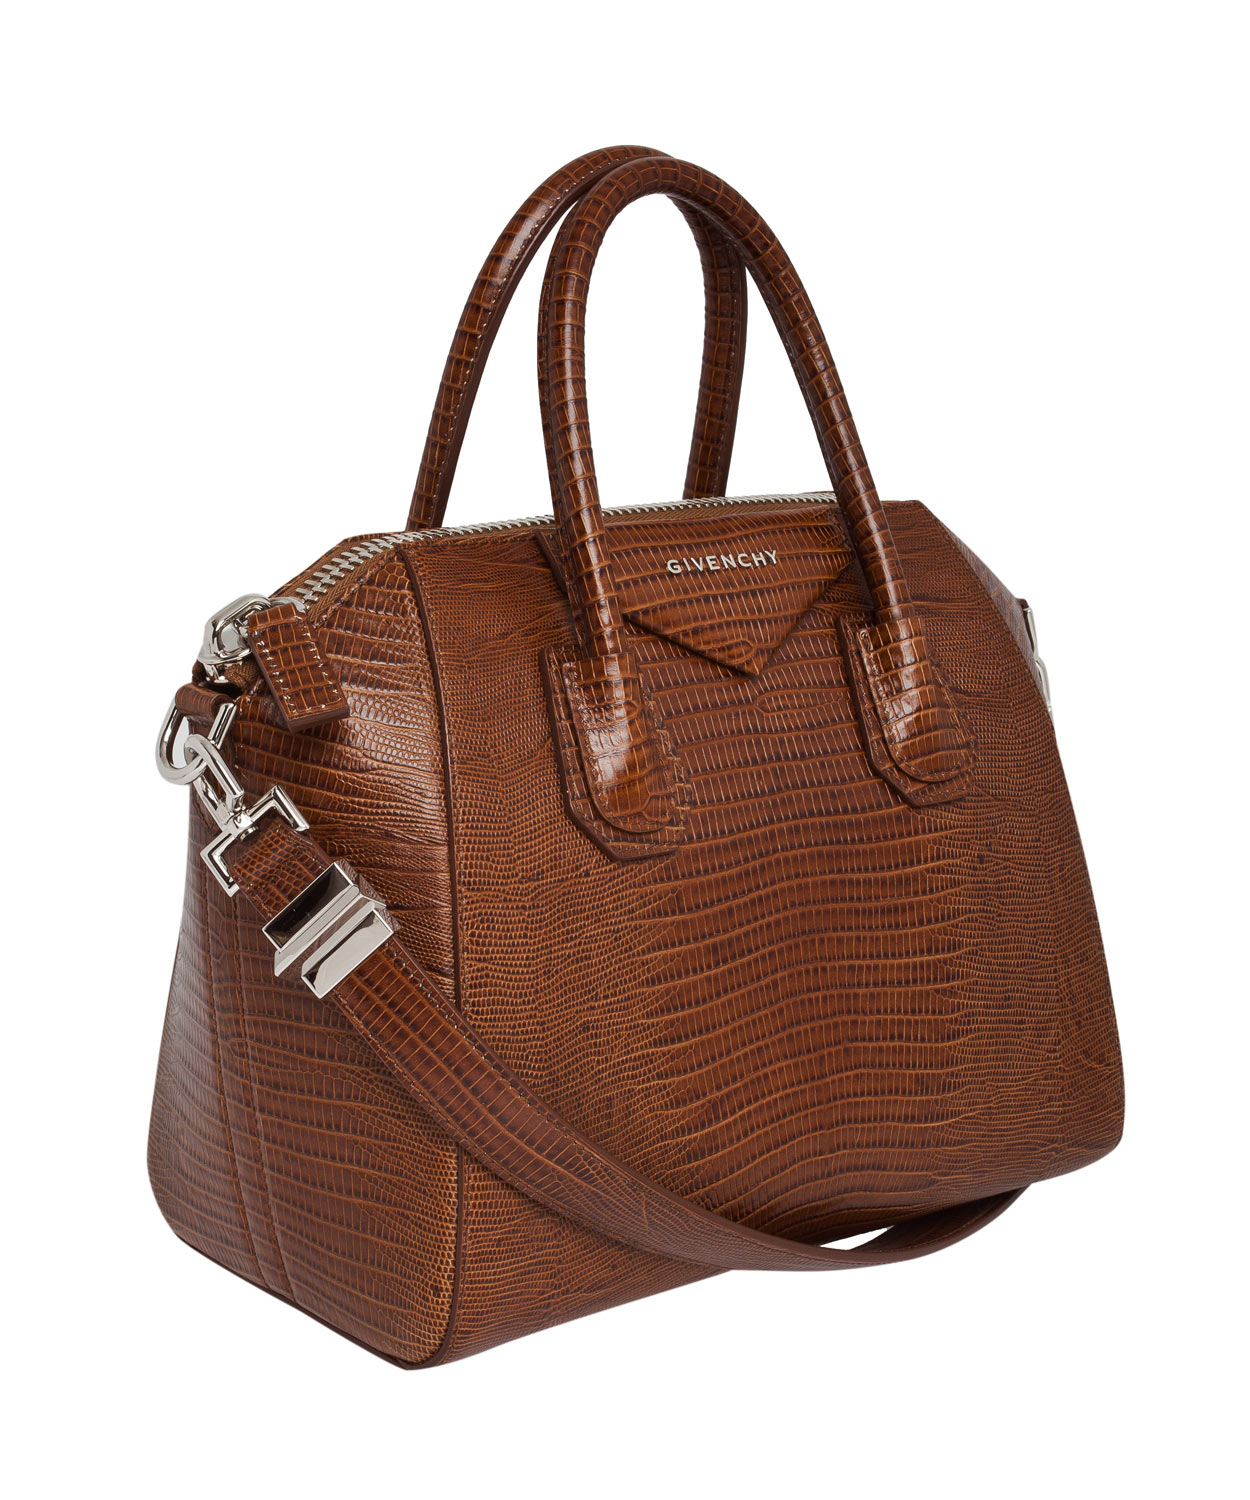 Givenchy Tan Antigona Medium Croc Embossed Leather Tote Bag in Brown - Lyst